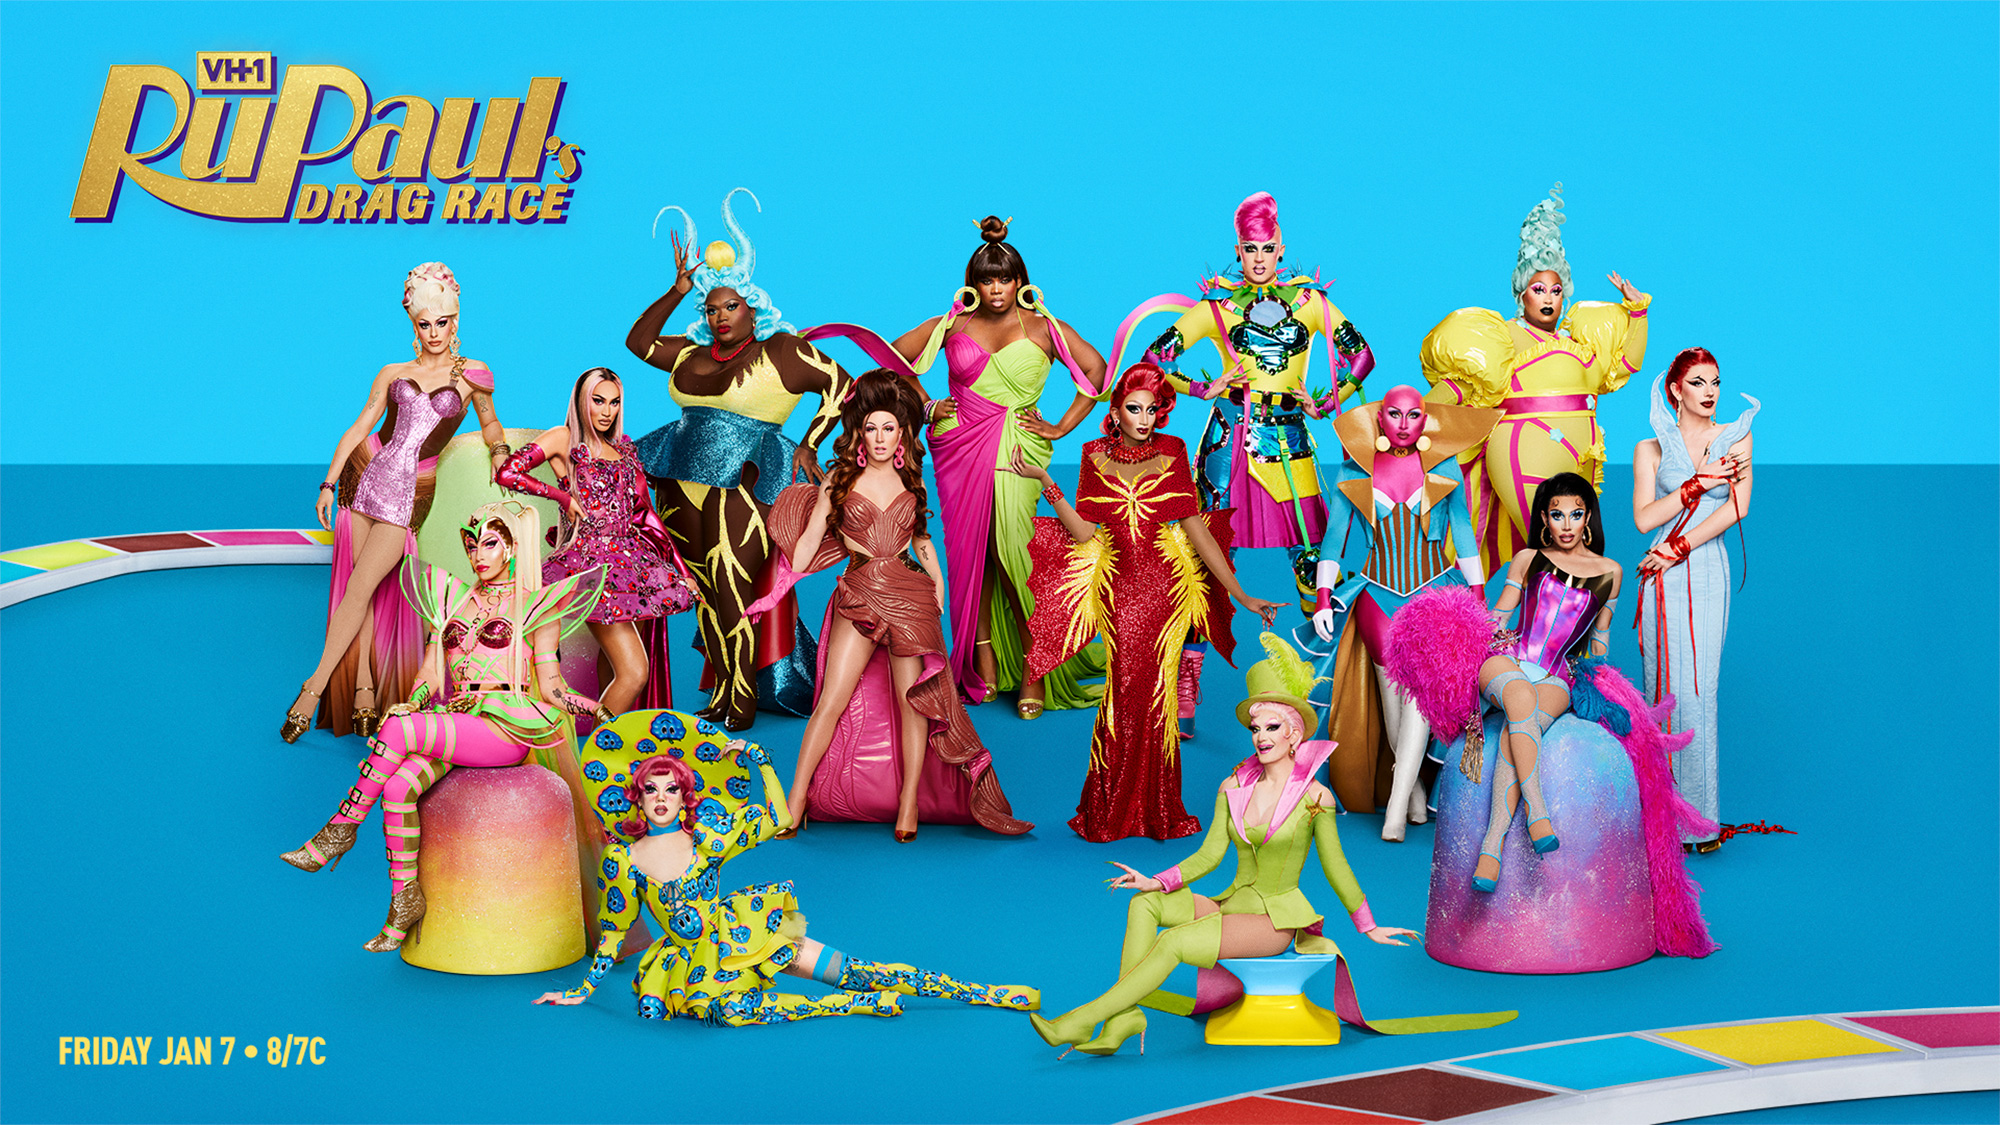 Cast of Season 14 of RuPaul’s Drag Race